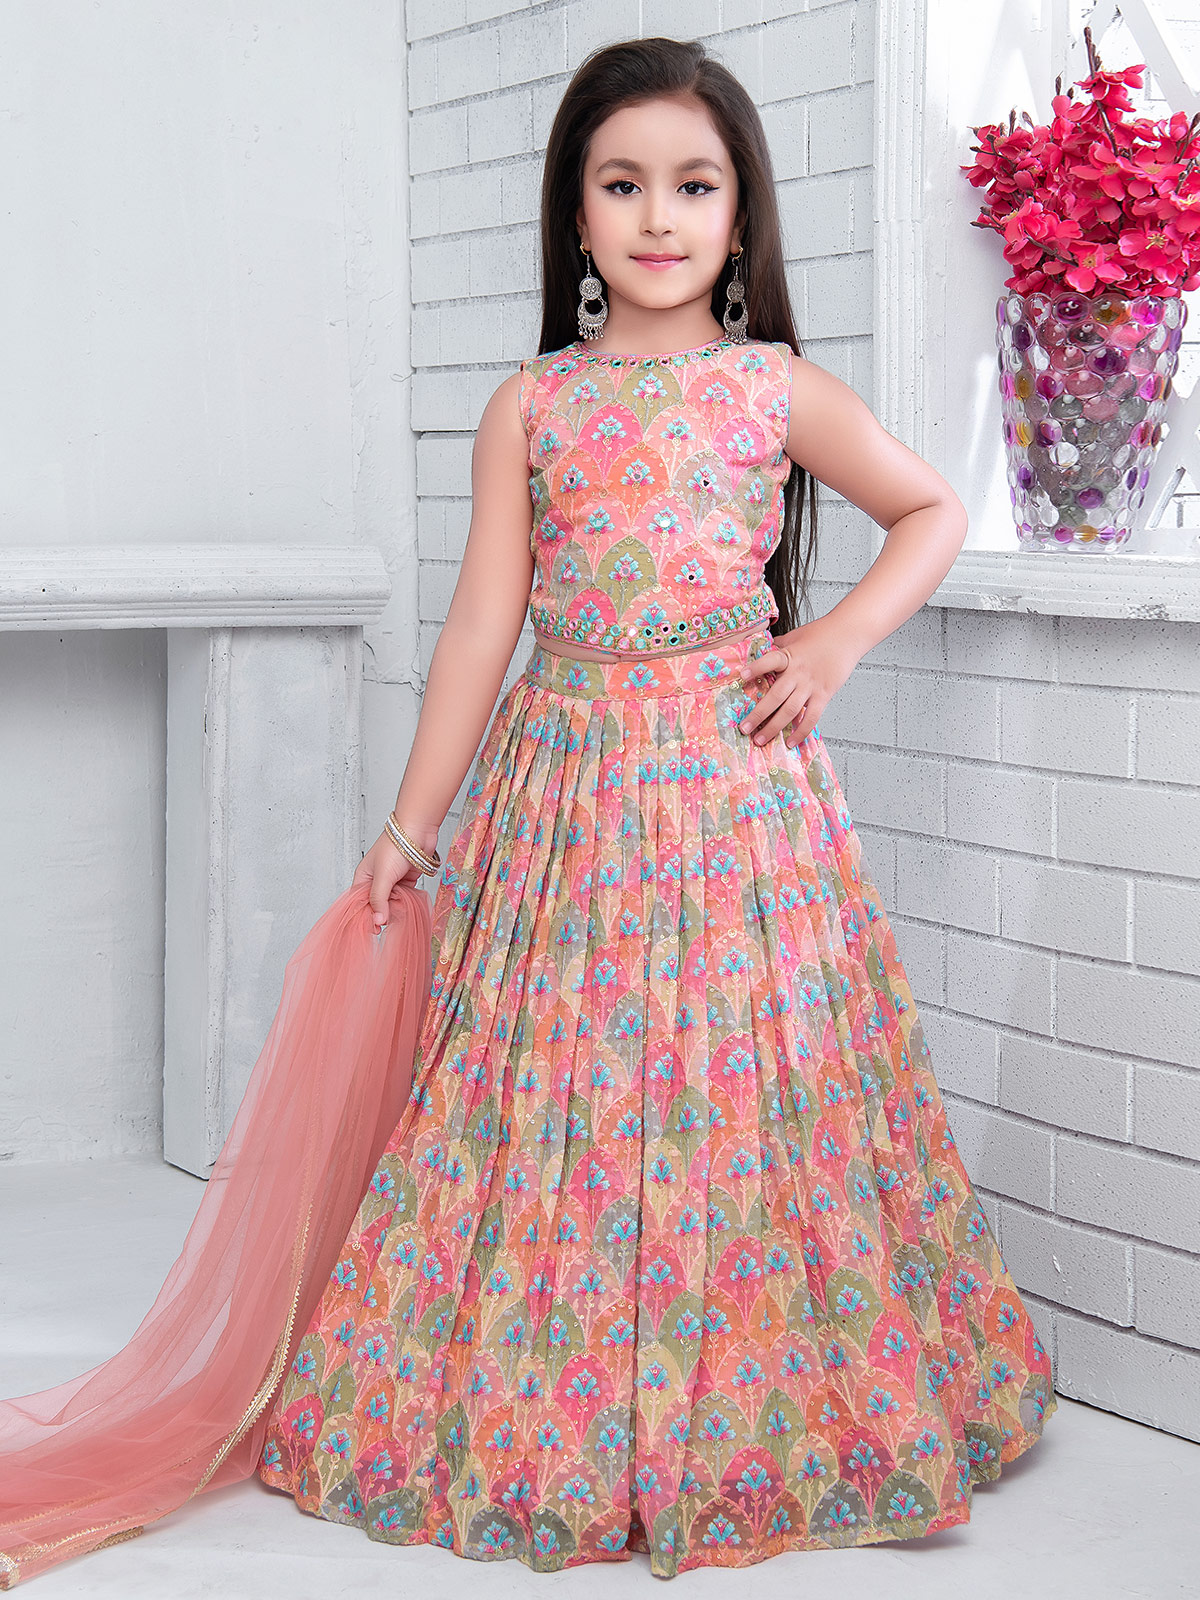 Display more than 167 lehenga dress for girl best